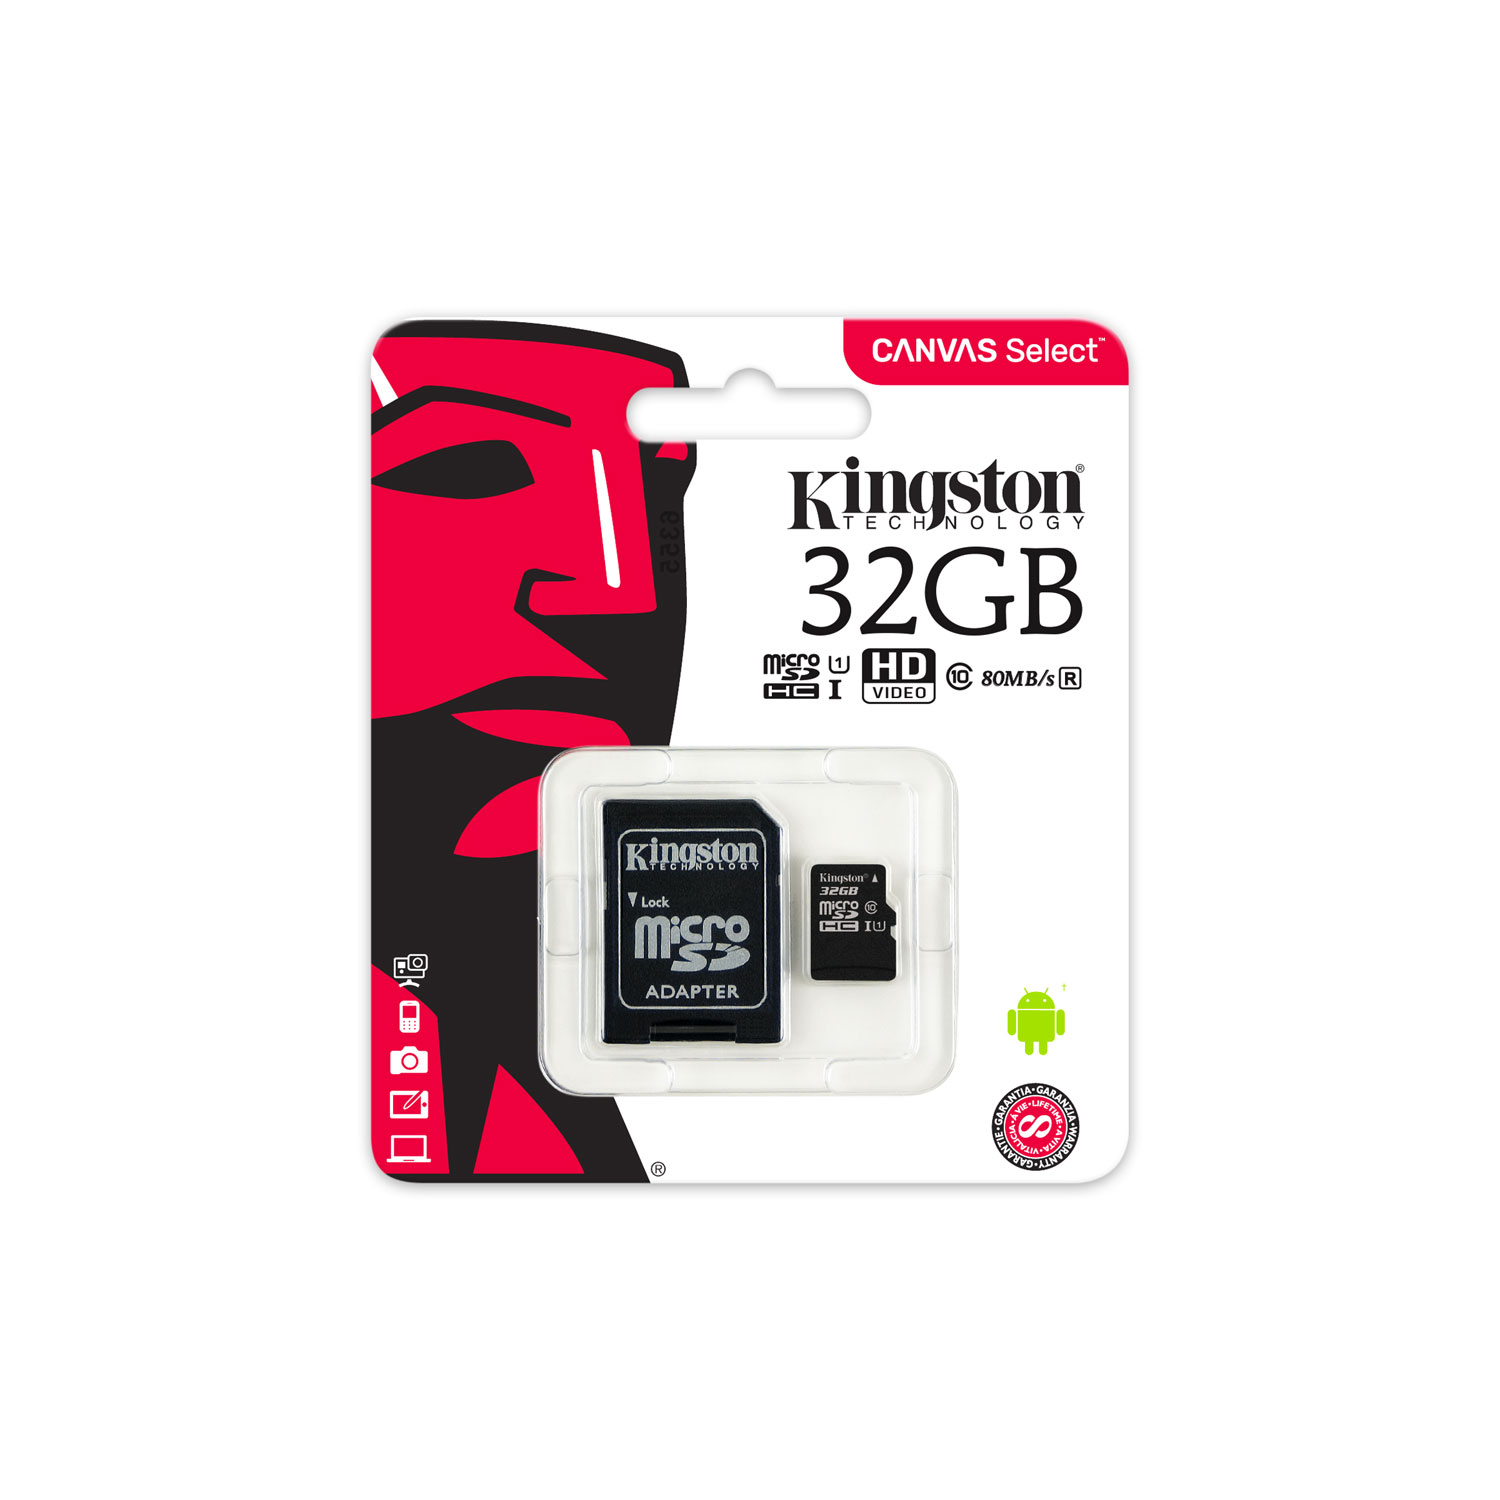 Kingston 32GB MicroSD Memory Card - USBs and Hard Drives